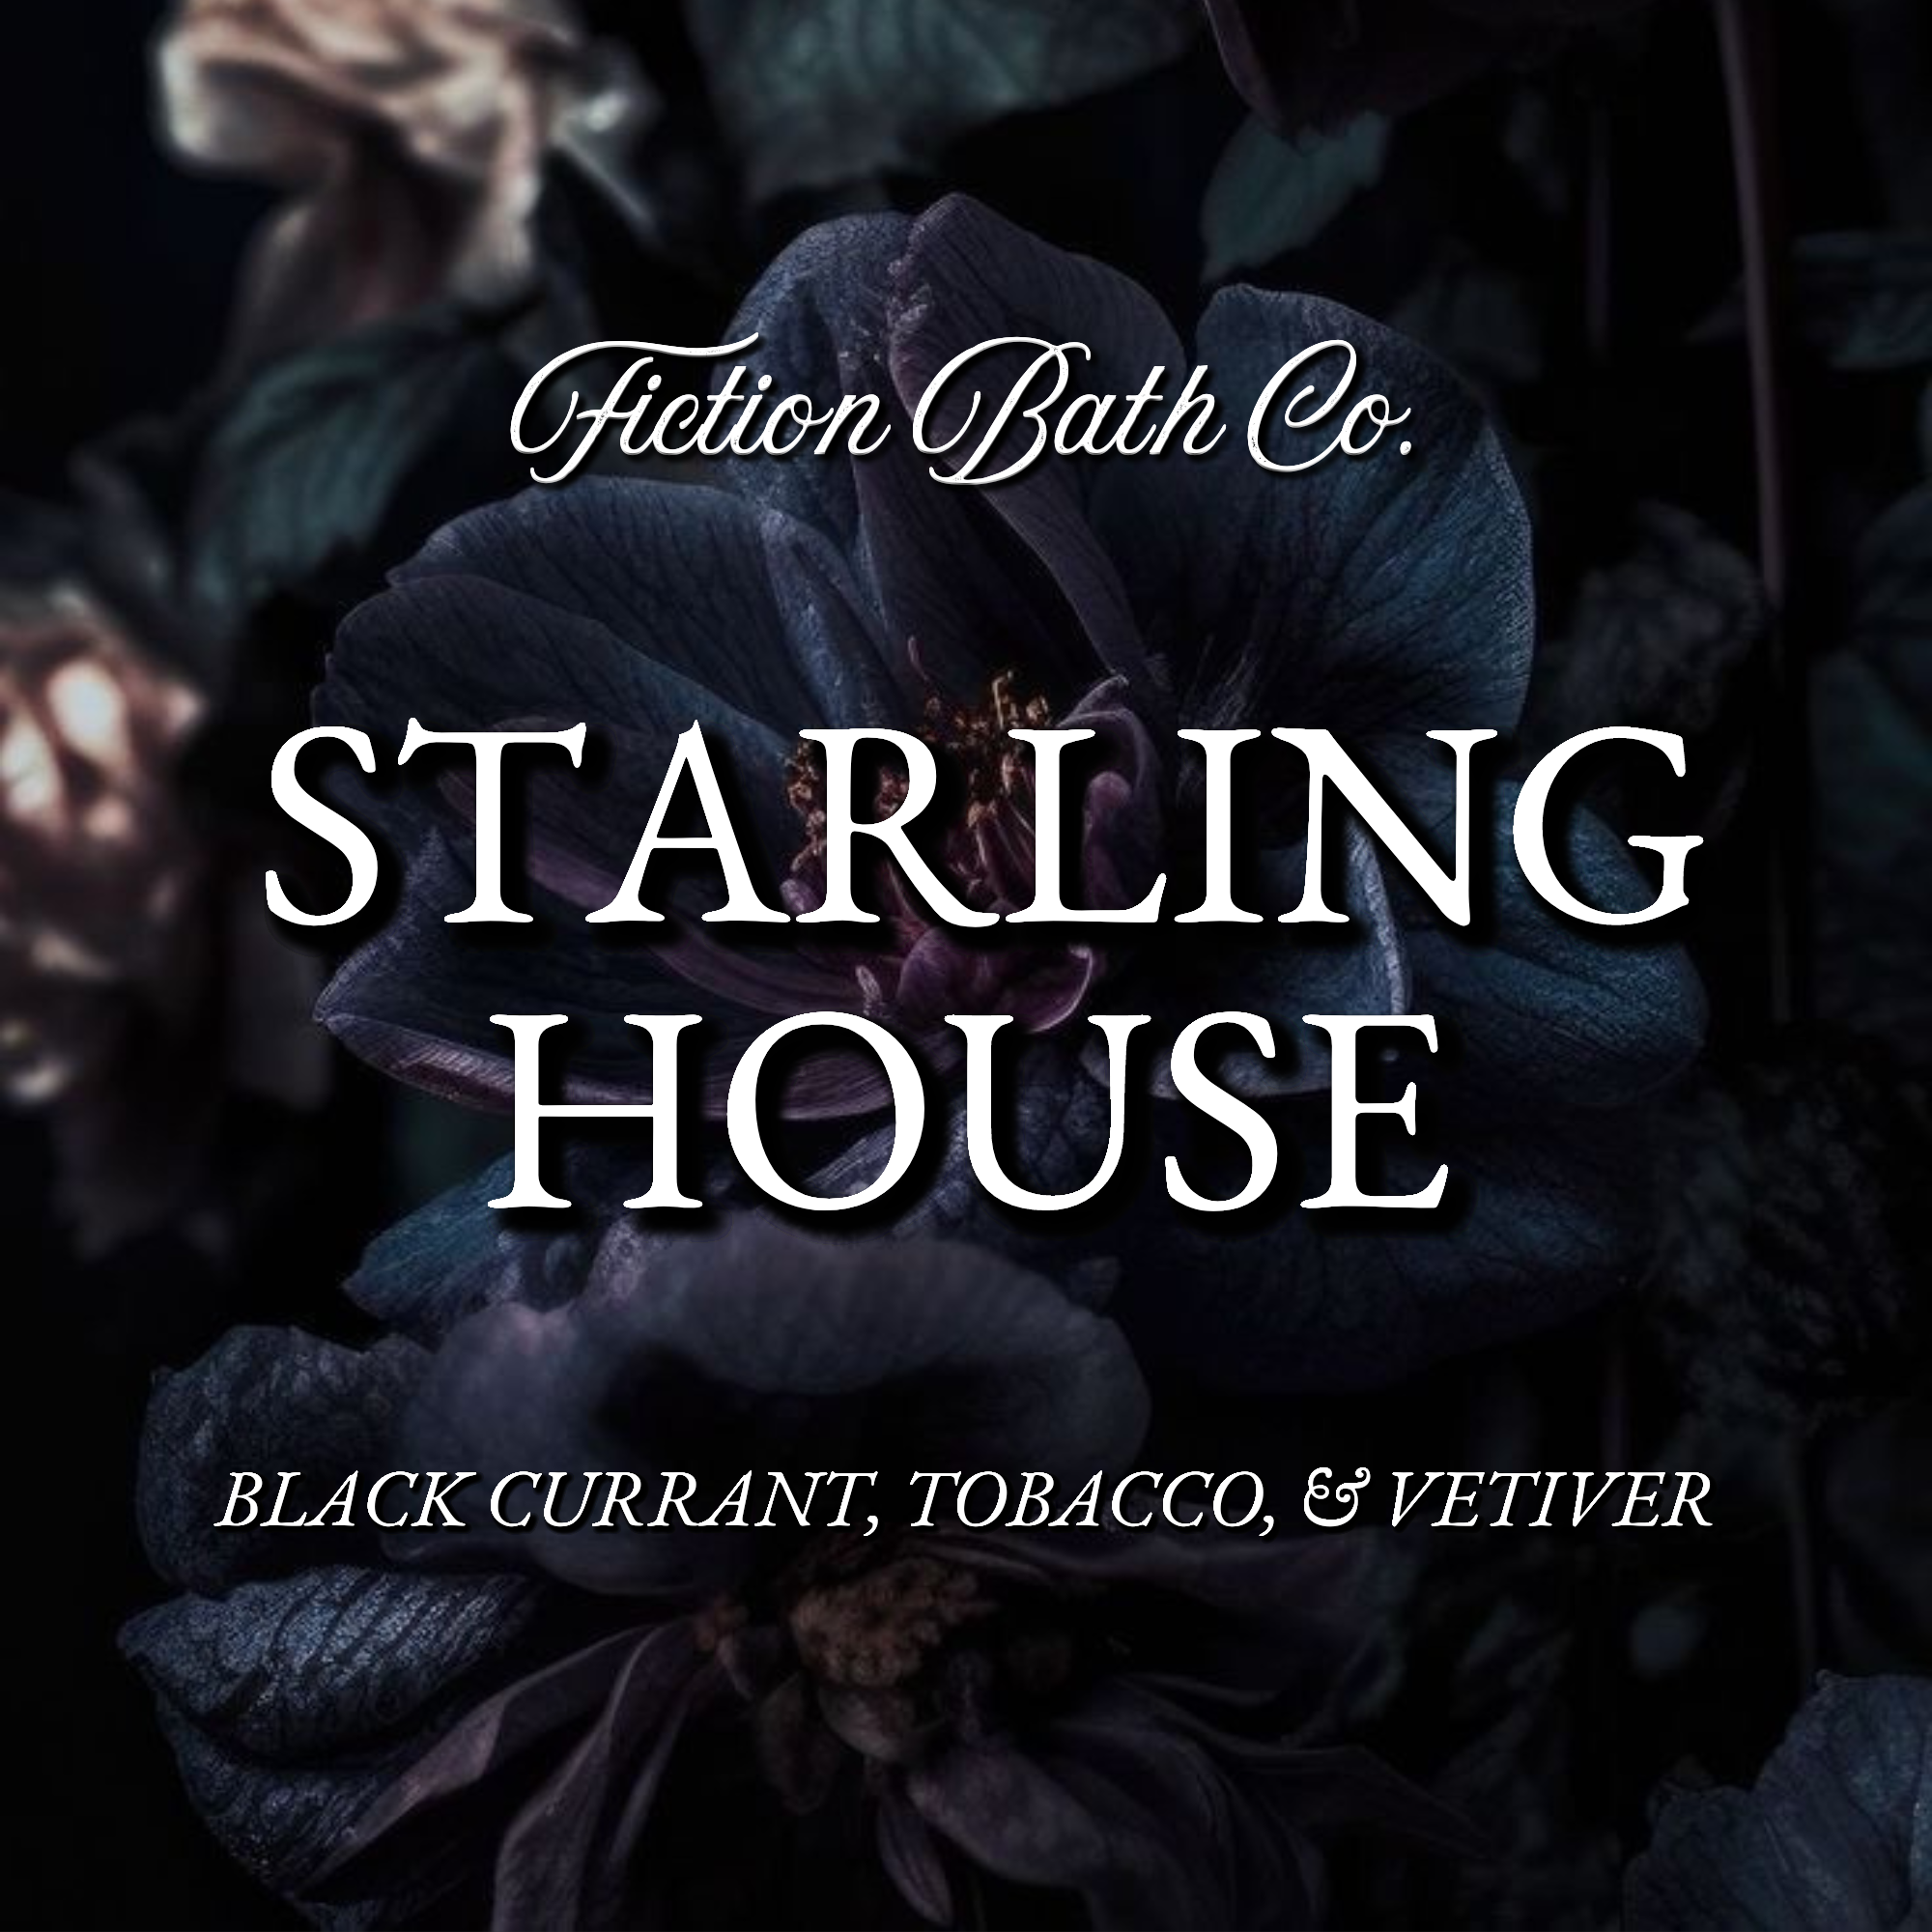 STARLING HOUSE – Fiction Bath Co.